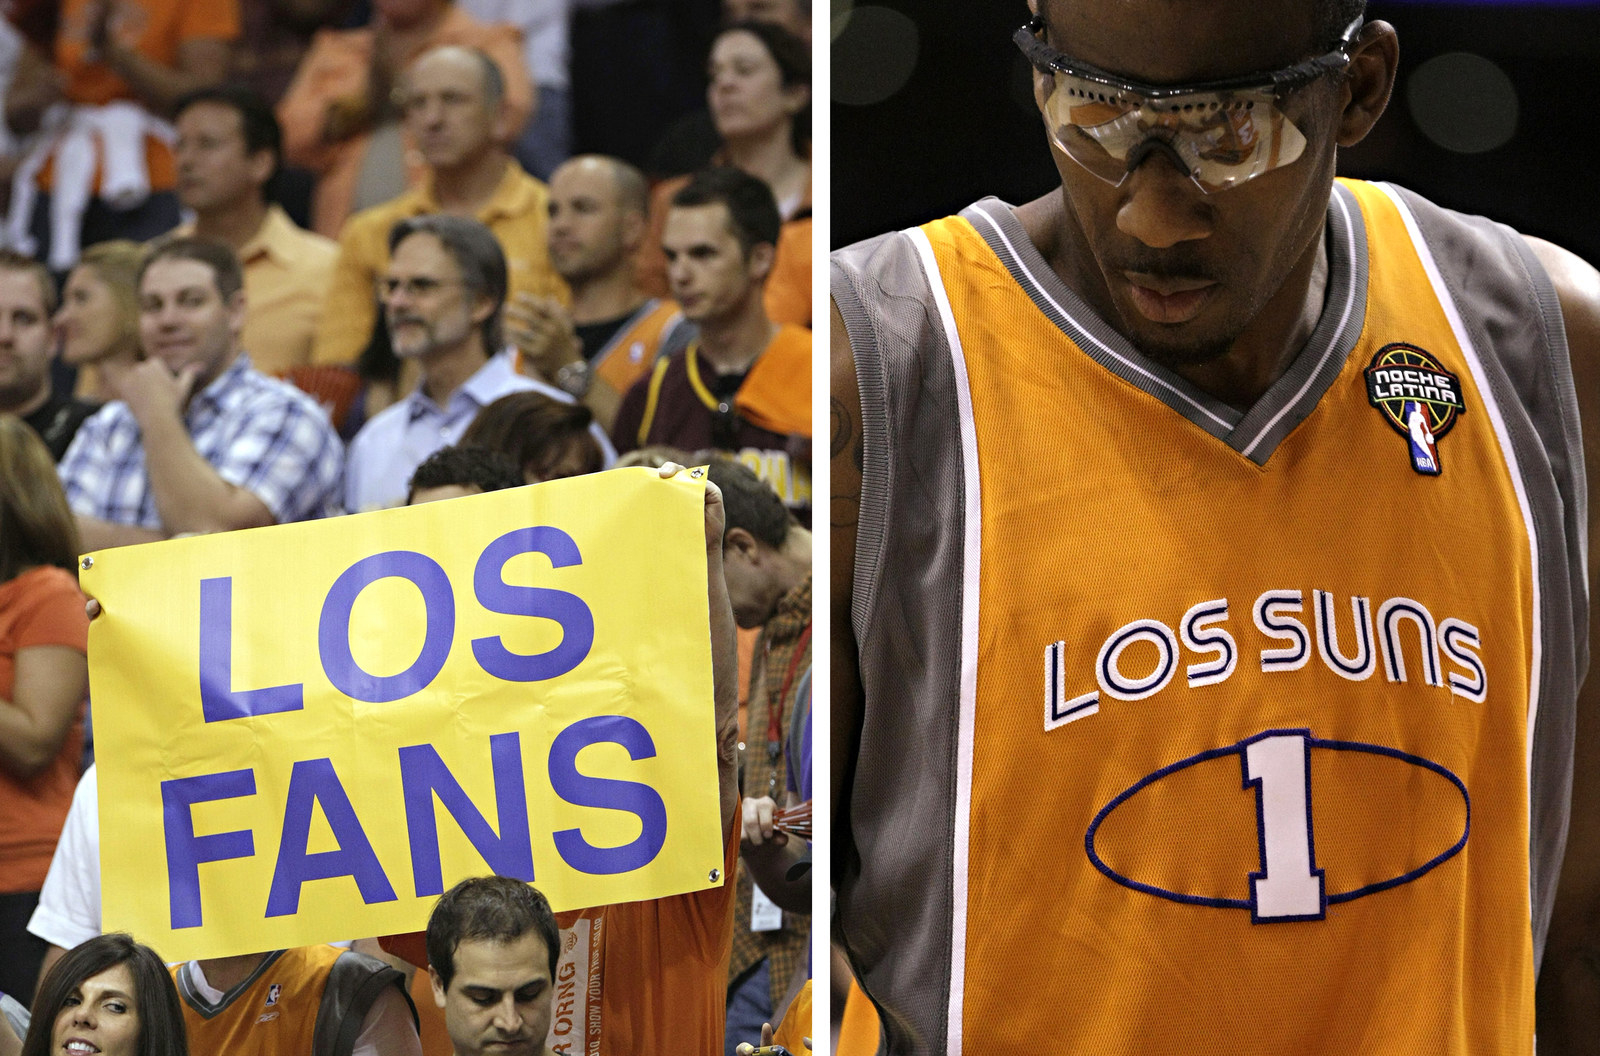 Suns to wear 'Los Suns' uniforms to honor Phoenix's Latino community